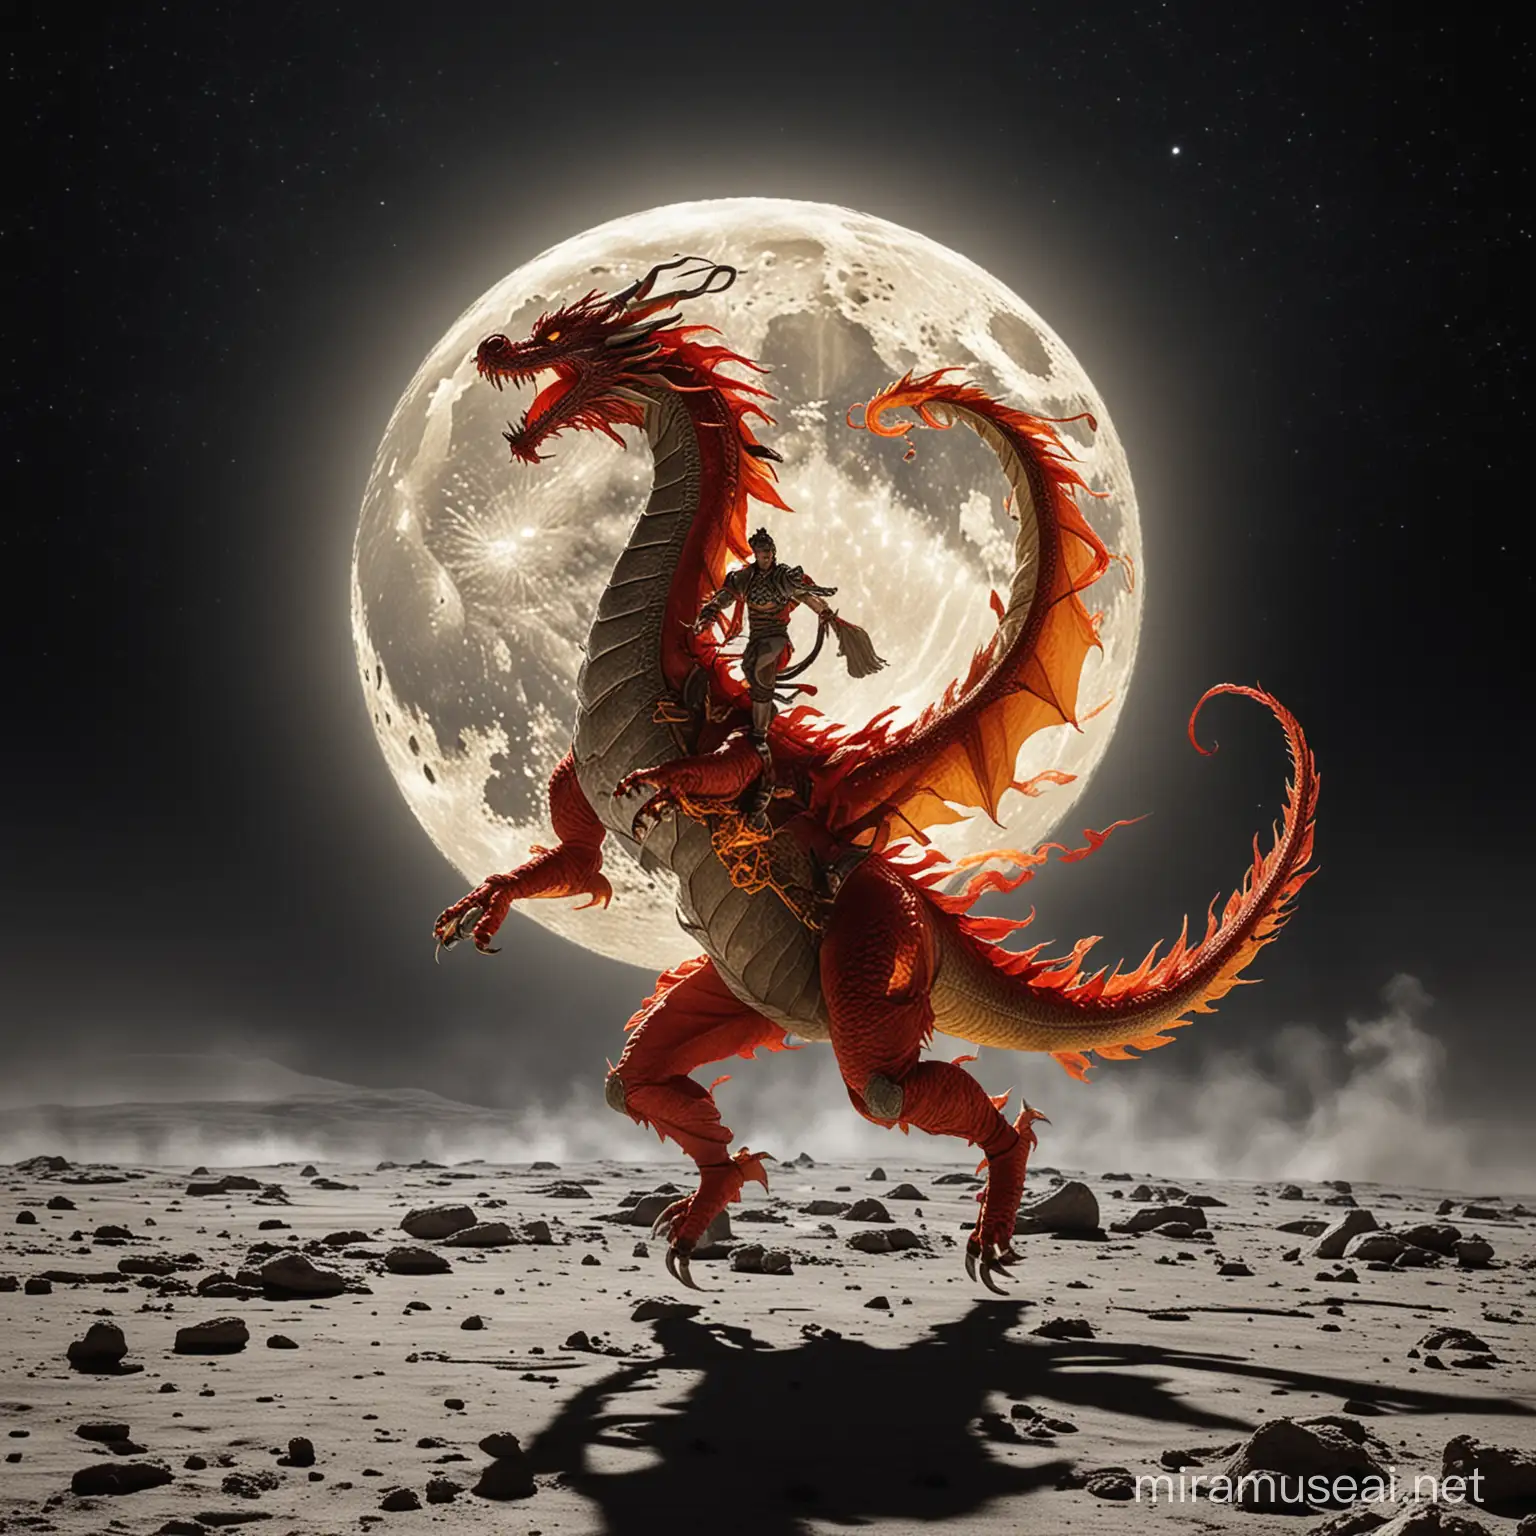 Dragon Dancing Breakdance on the Moon Fantasy Lunar Performance